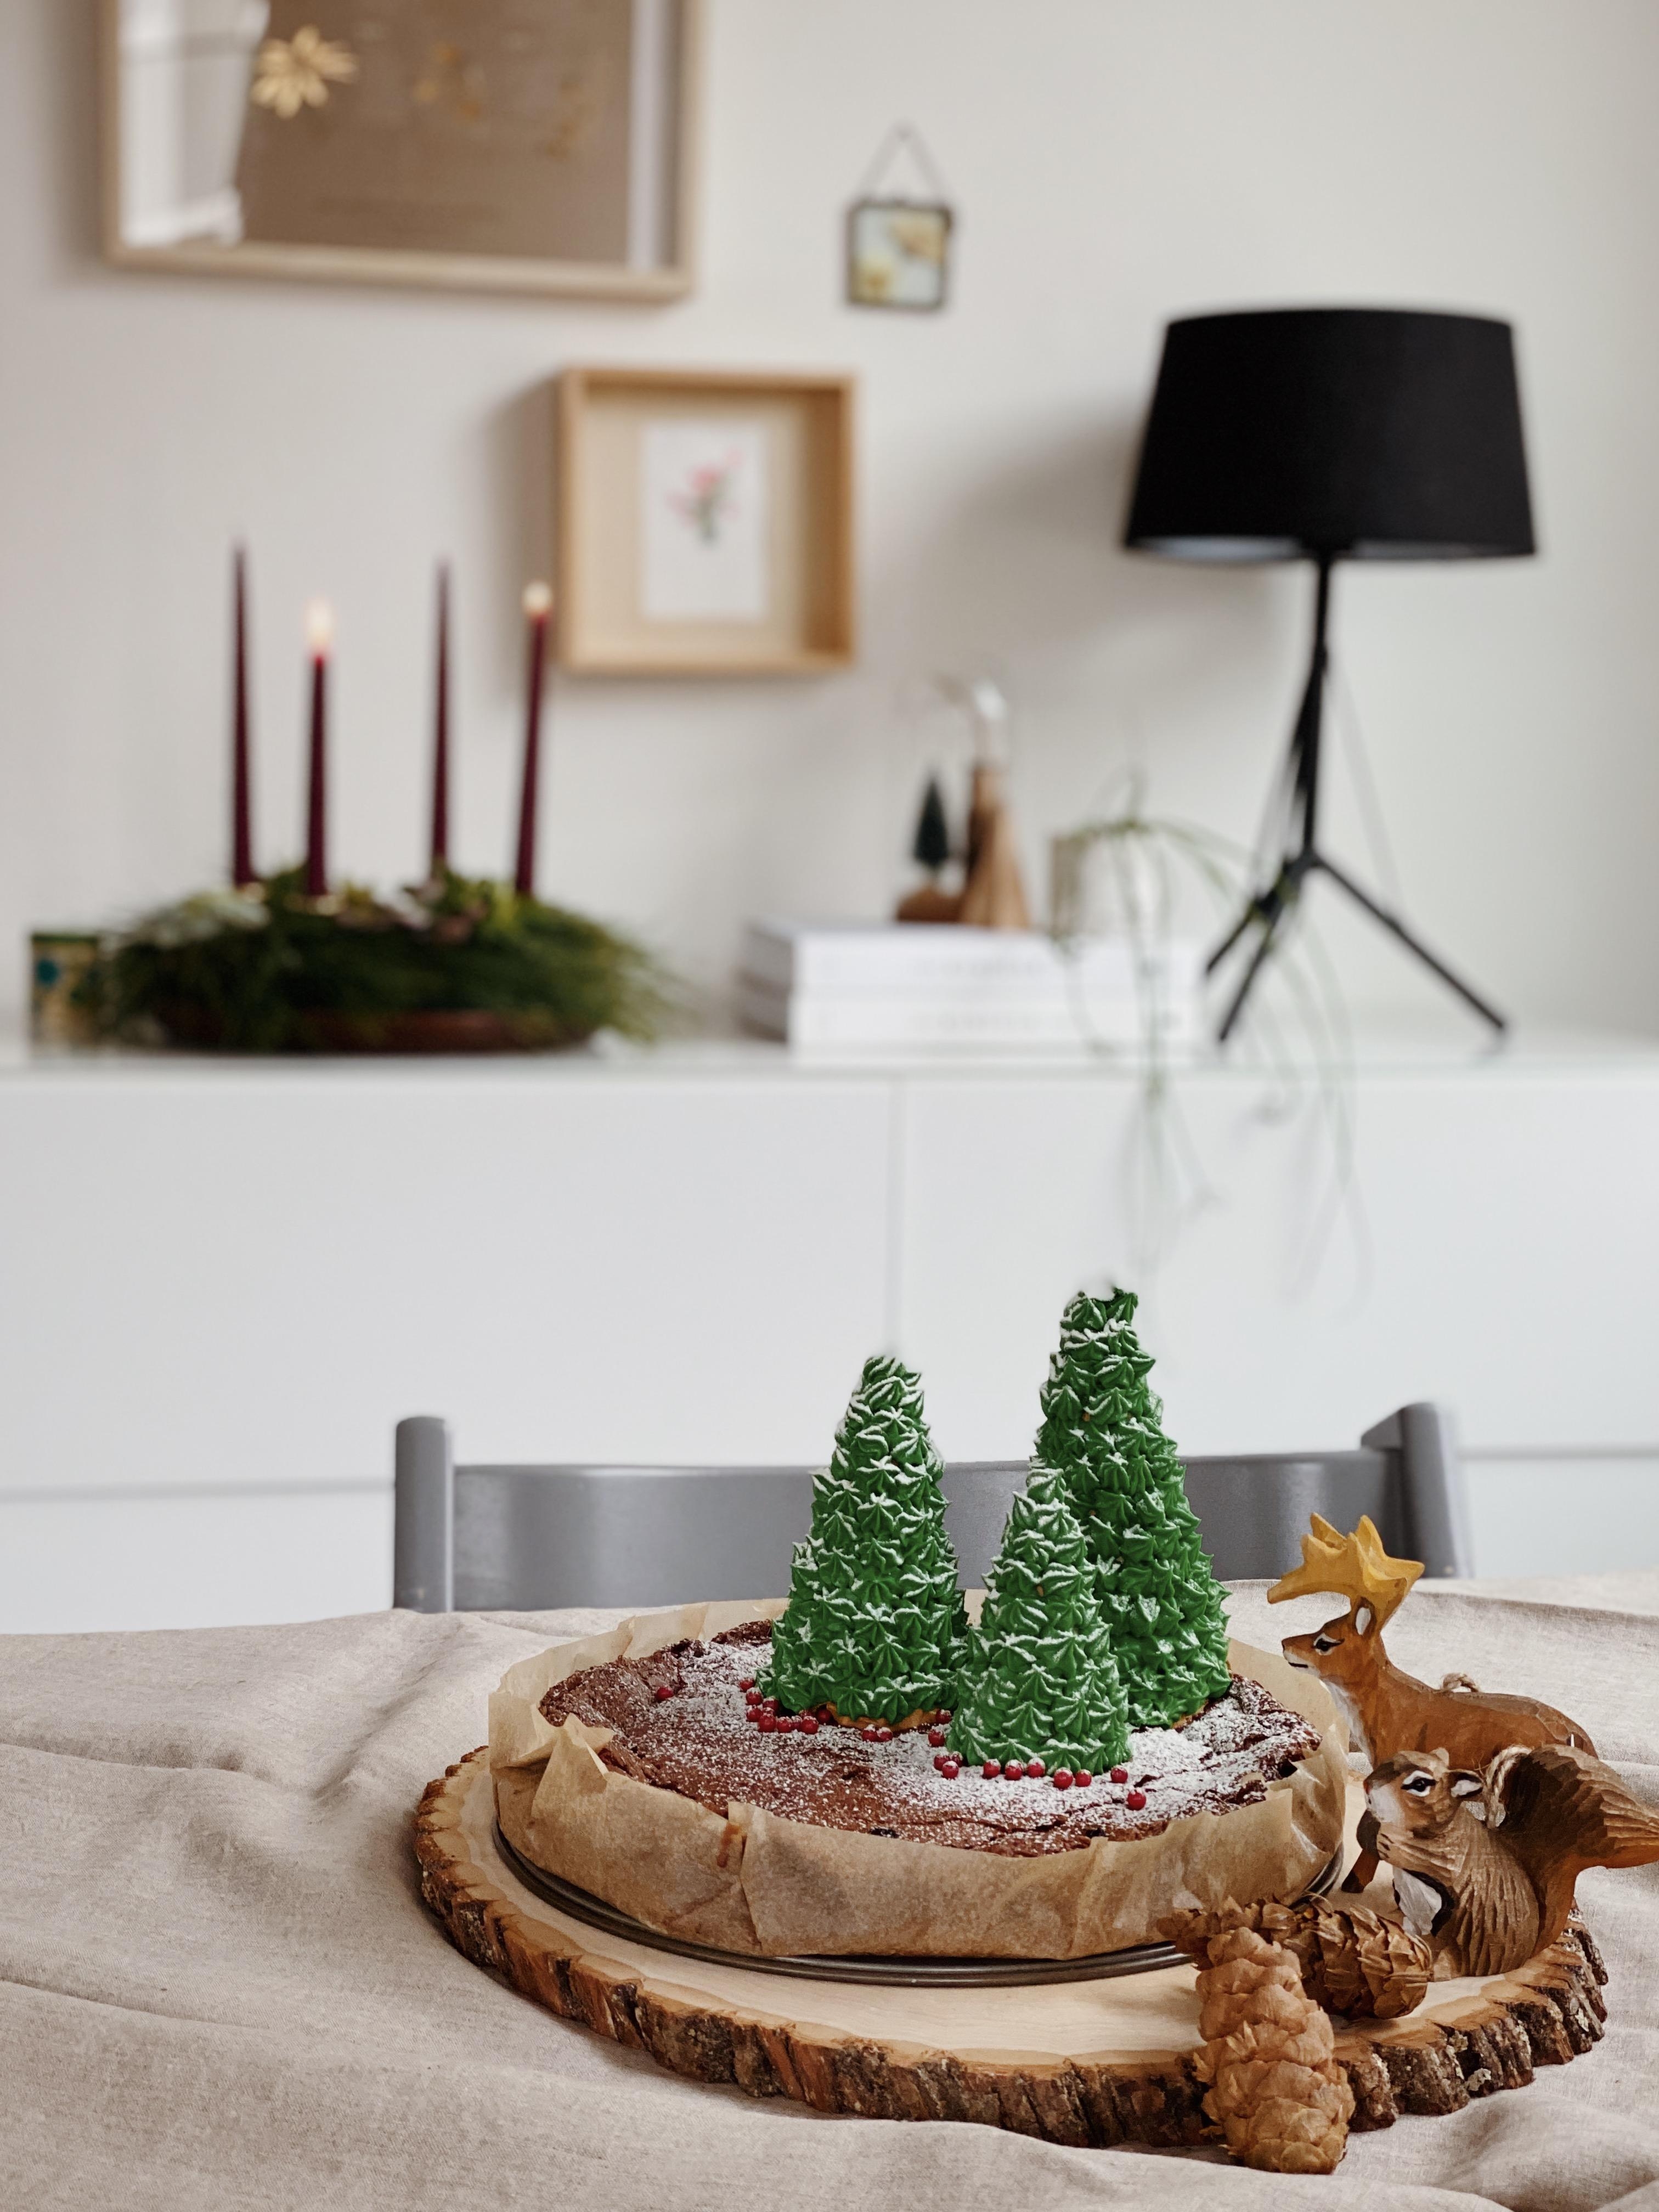 Schokoladentarte im Weihnachtslook #christmascake #cake #onthetable #kuchen